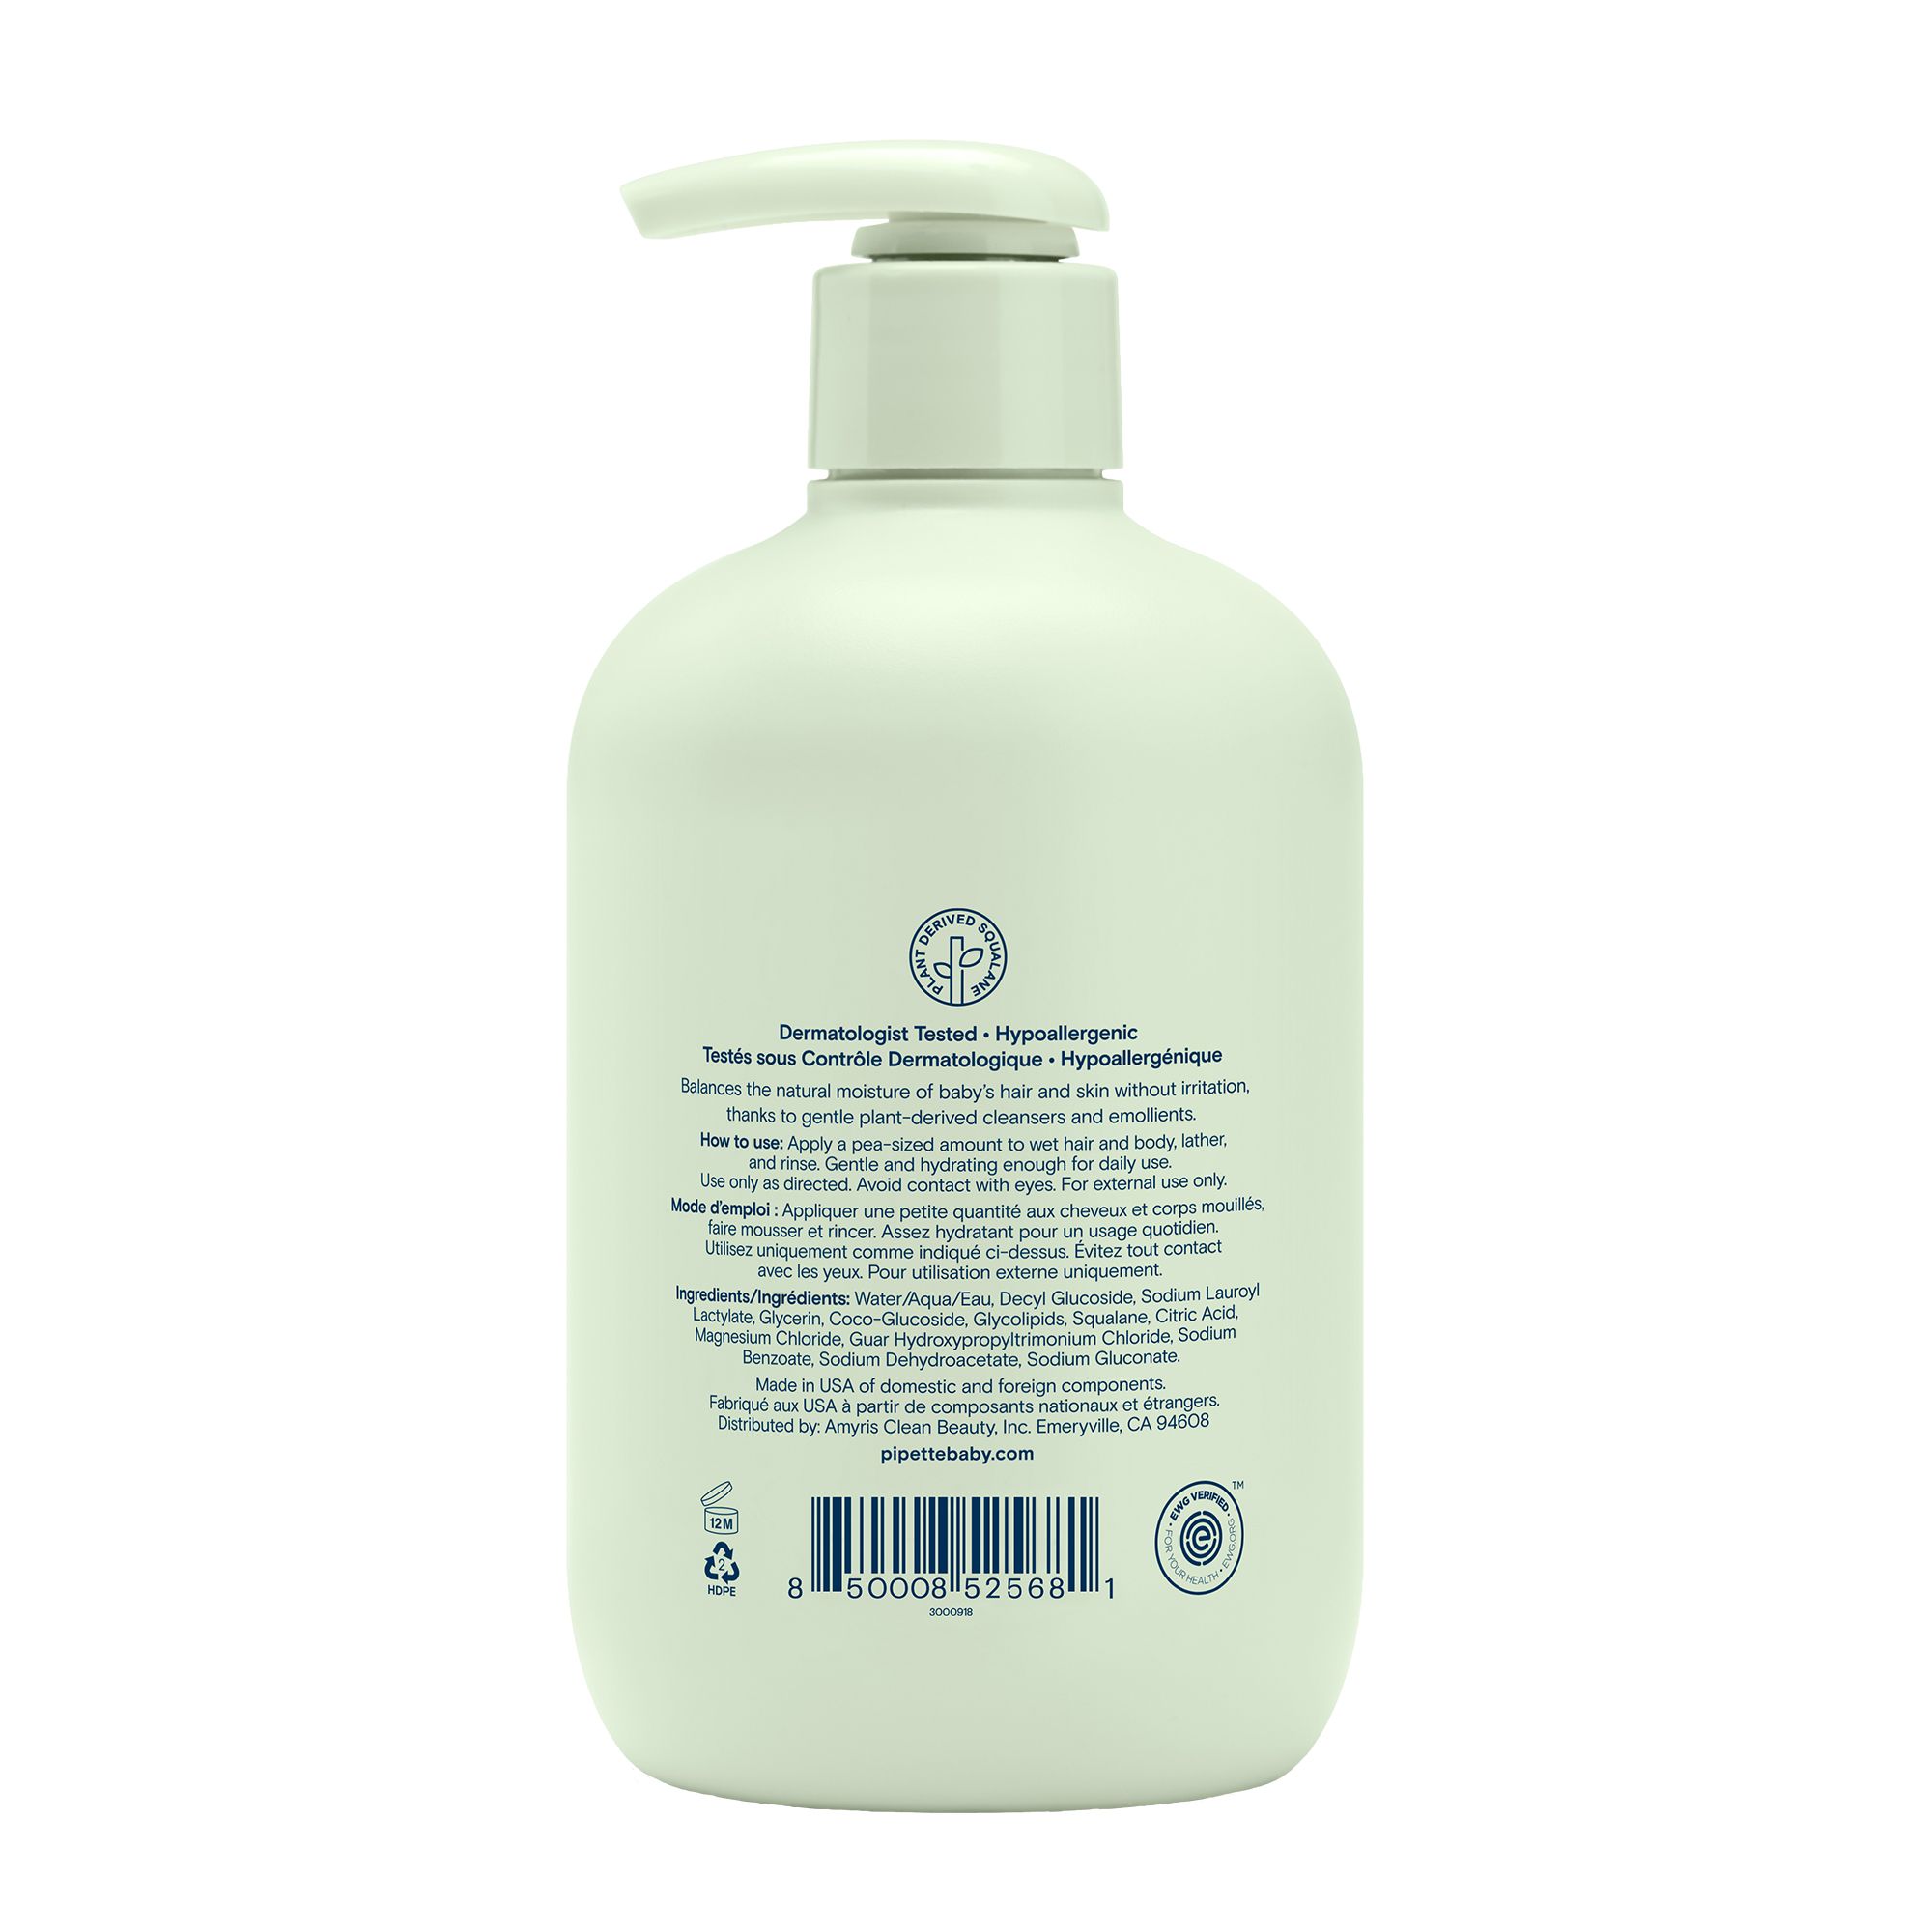 DISCPipette Baby Shampoo + Wash, Fragrance Free - 12 fl oz